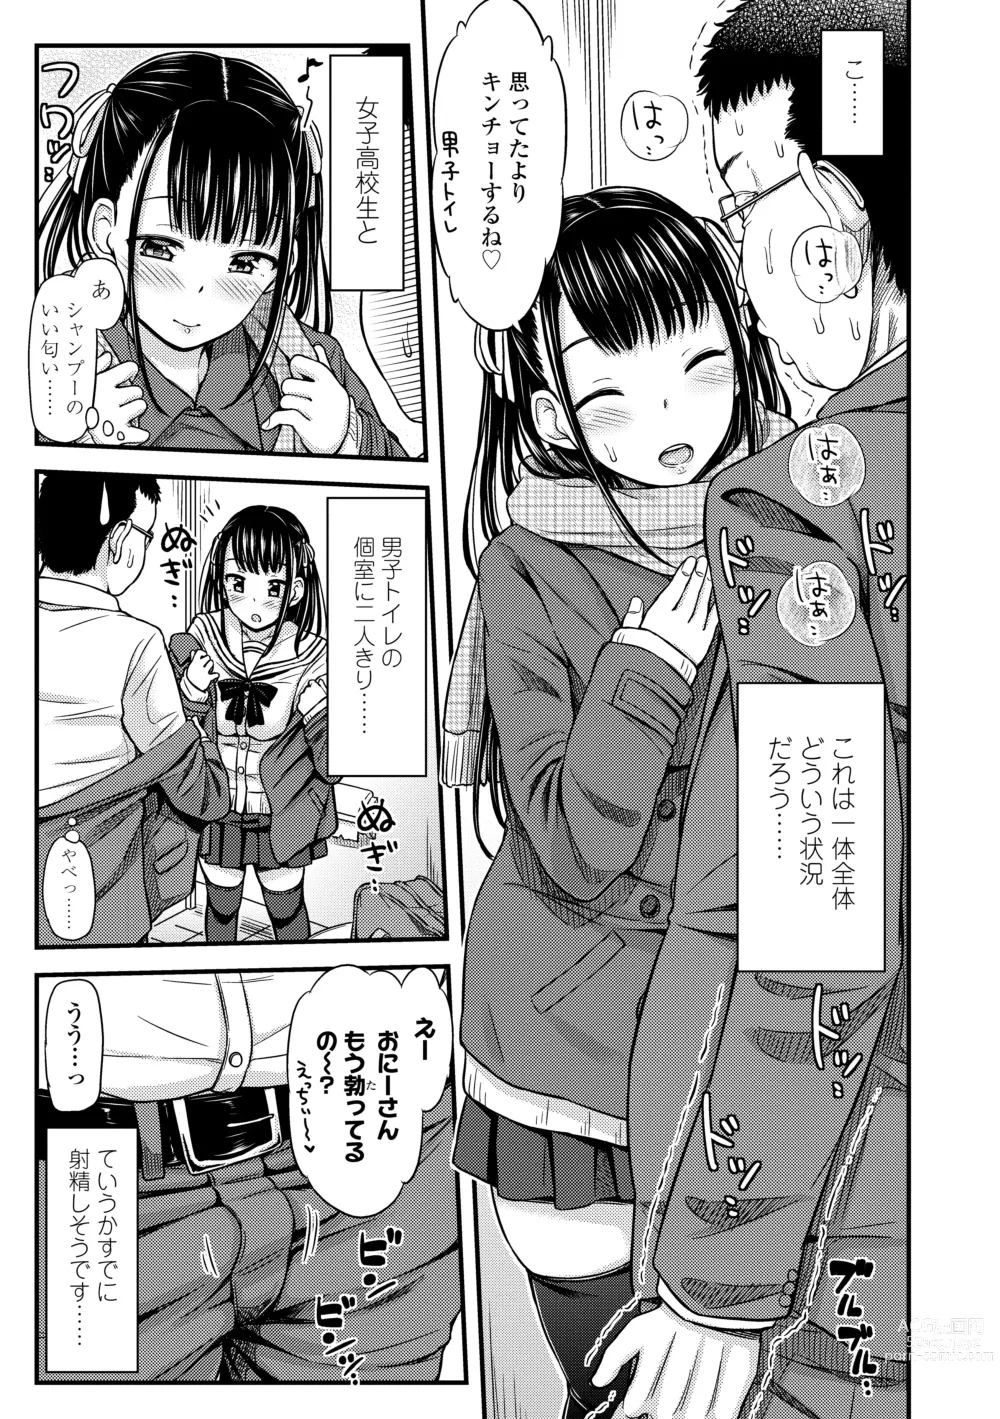 Page 9 of manga JK no Katachi